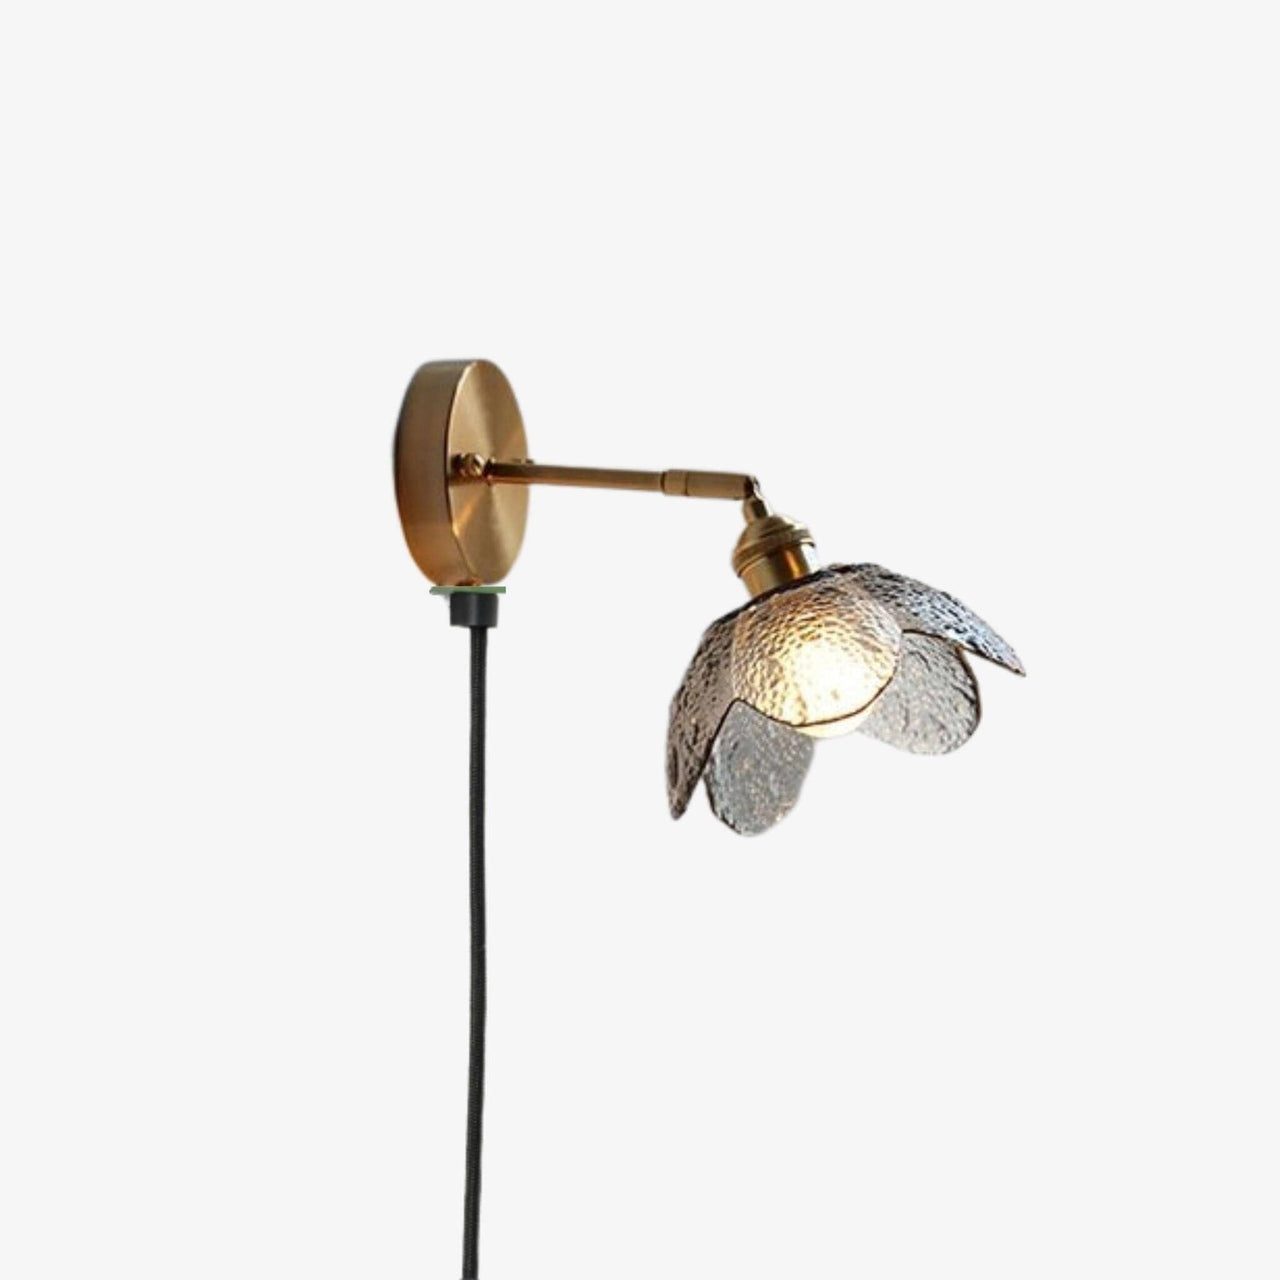 "Dalia" Modern Wall Lamp Sconce Pull Chain / Plug in / Hardware Wall Sconce Lamp Artedimo Plug In US 